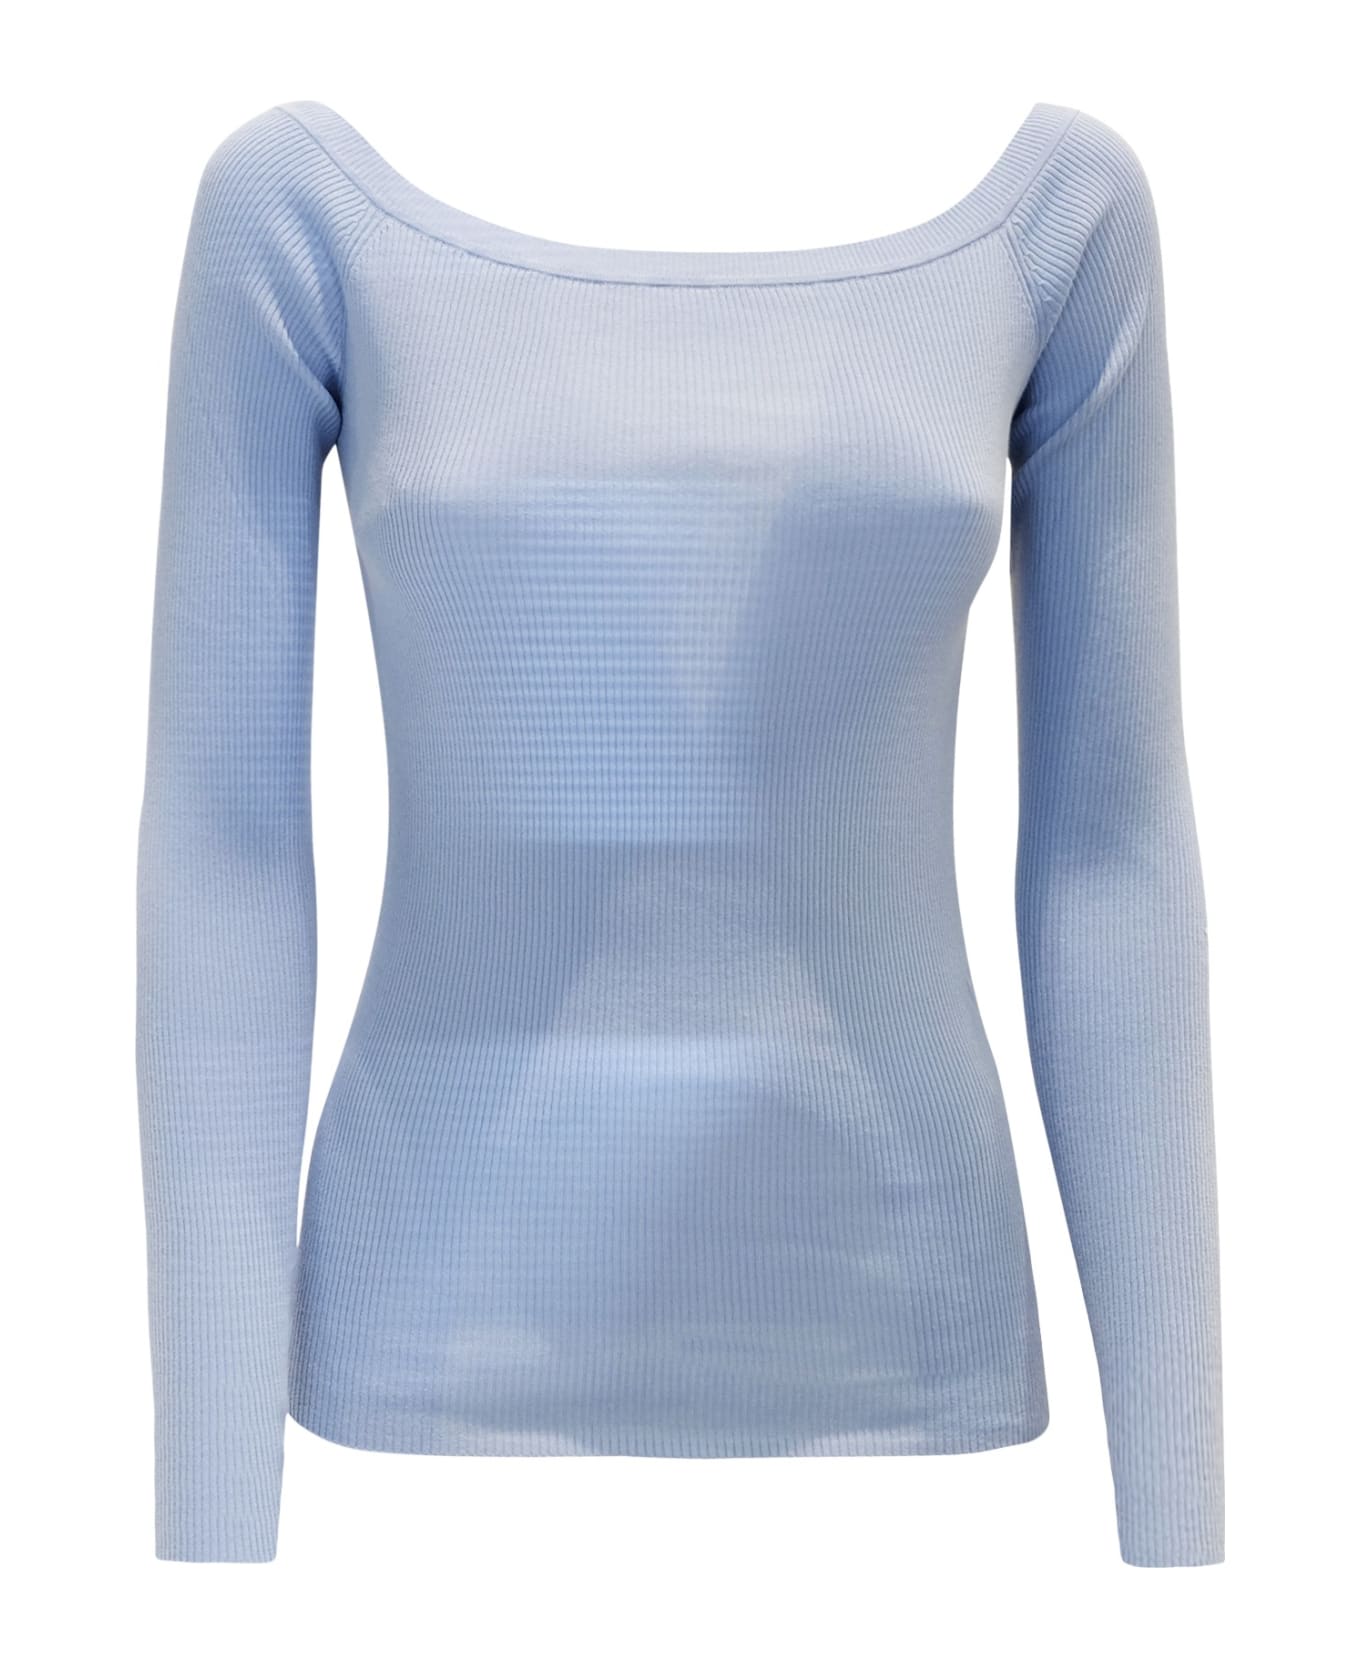 Parosh Powder Blue Cotton Cipria24 Sweater - POWDER BLUE ニットウェア